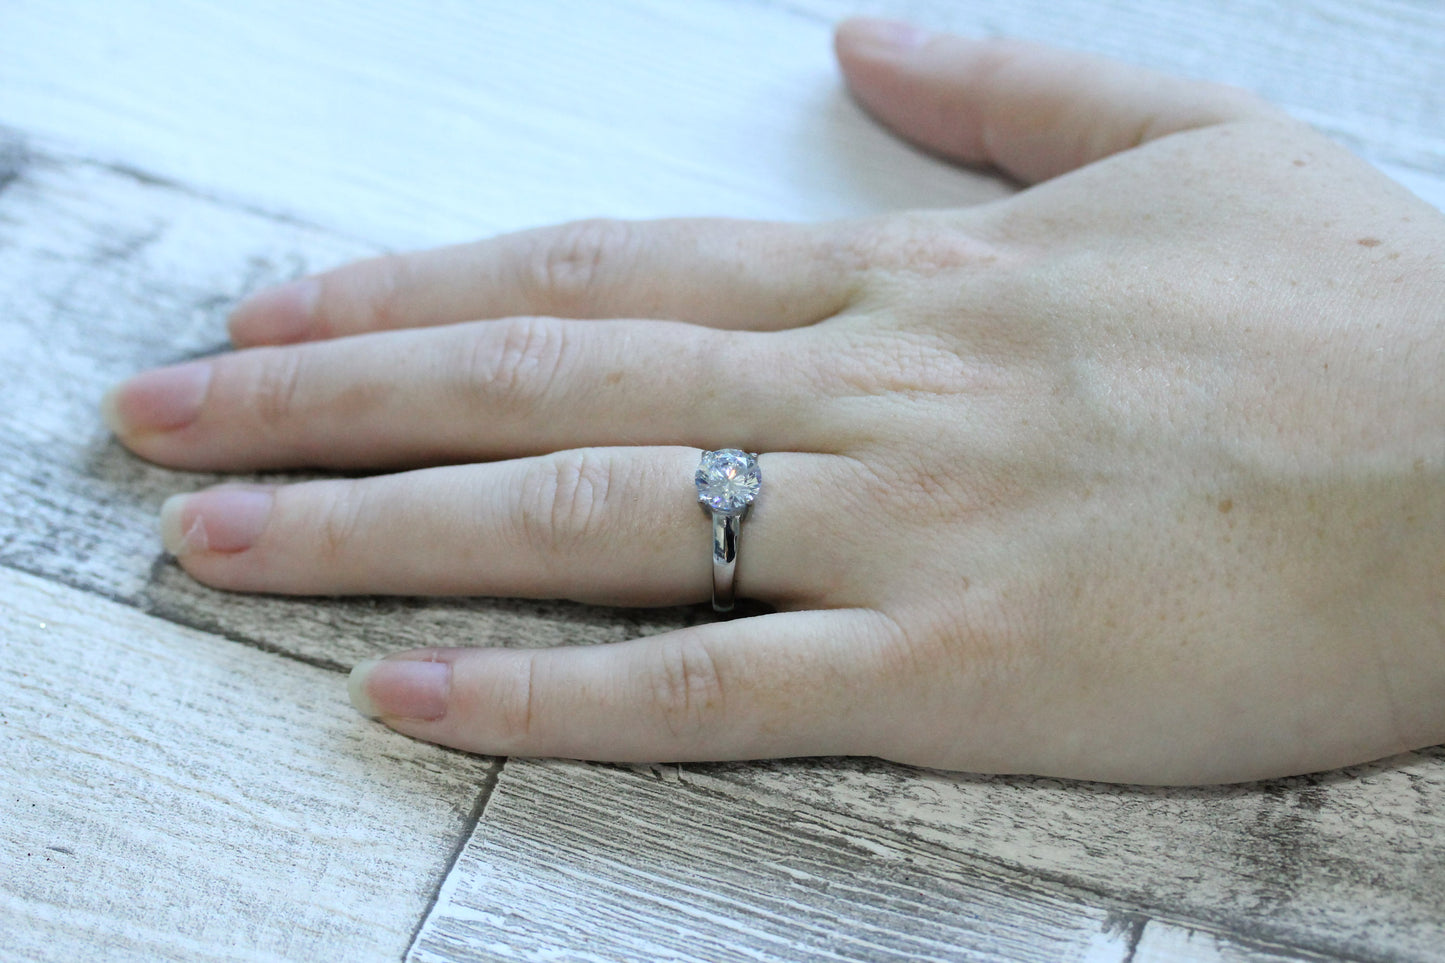 Titanium & 2ct Man Made Diamond Simulant ring in Titanium or White Gold - engagement ring - wedding ring - handmade ring